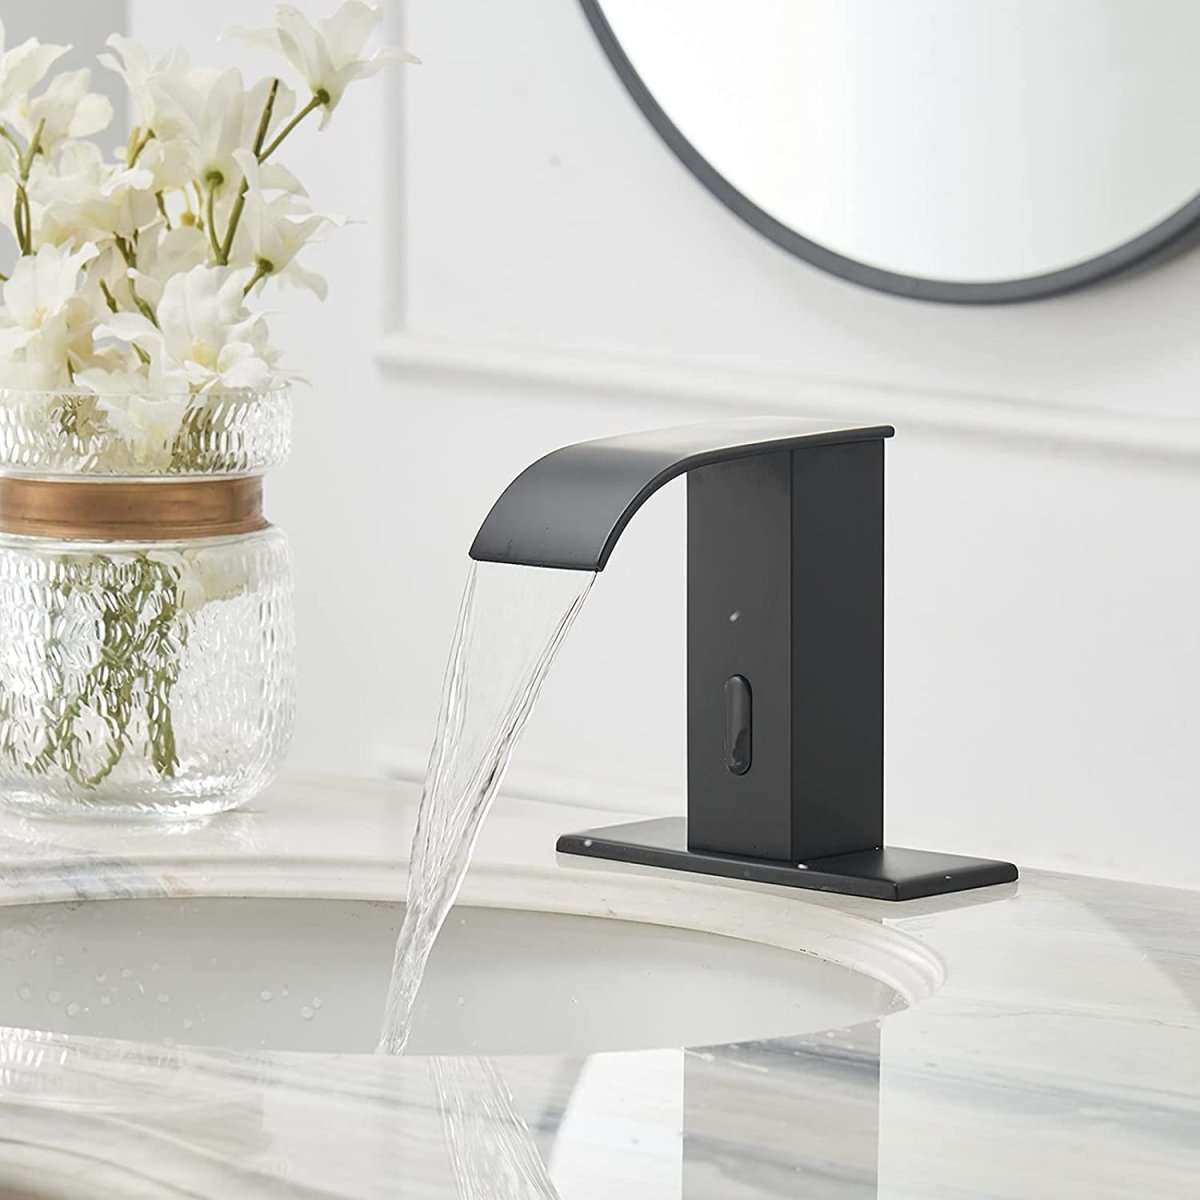 Waterfall Automatic Sensor Touchless Bathroom Faucet Black - buyfaucet.com